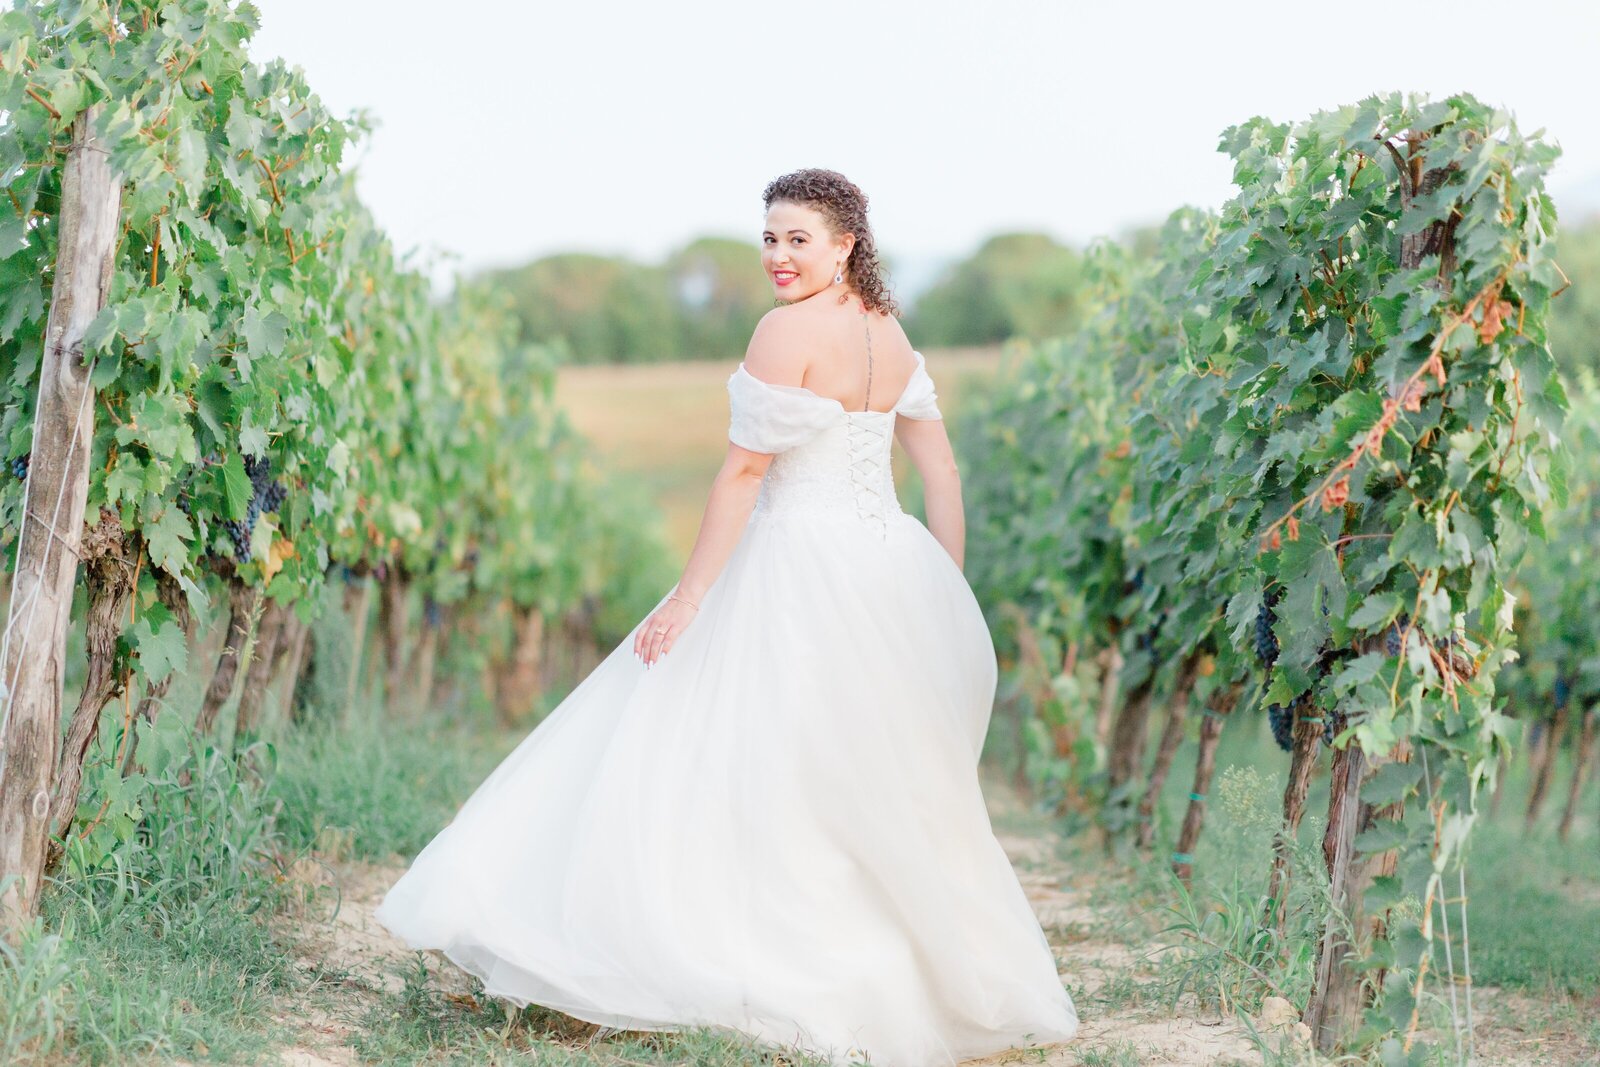 erica-lauren-photography-stacey-lance-tuscany-italy-wedding-sept-05-2020-302